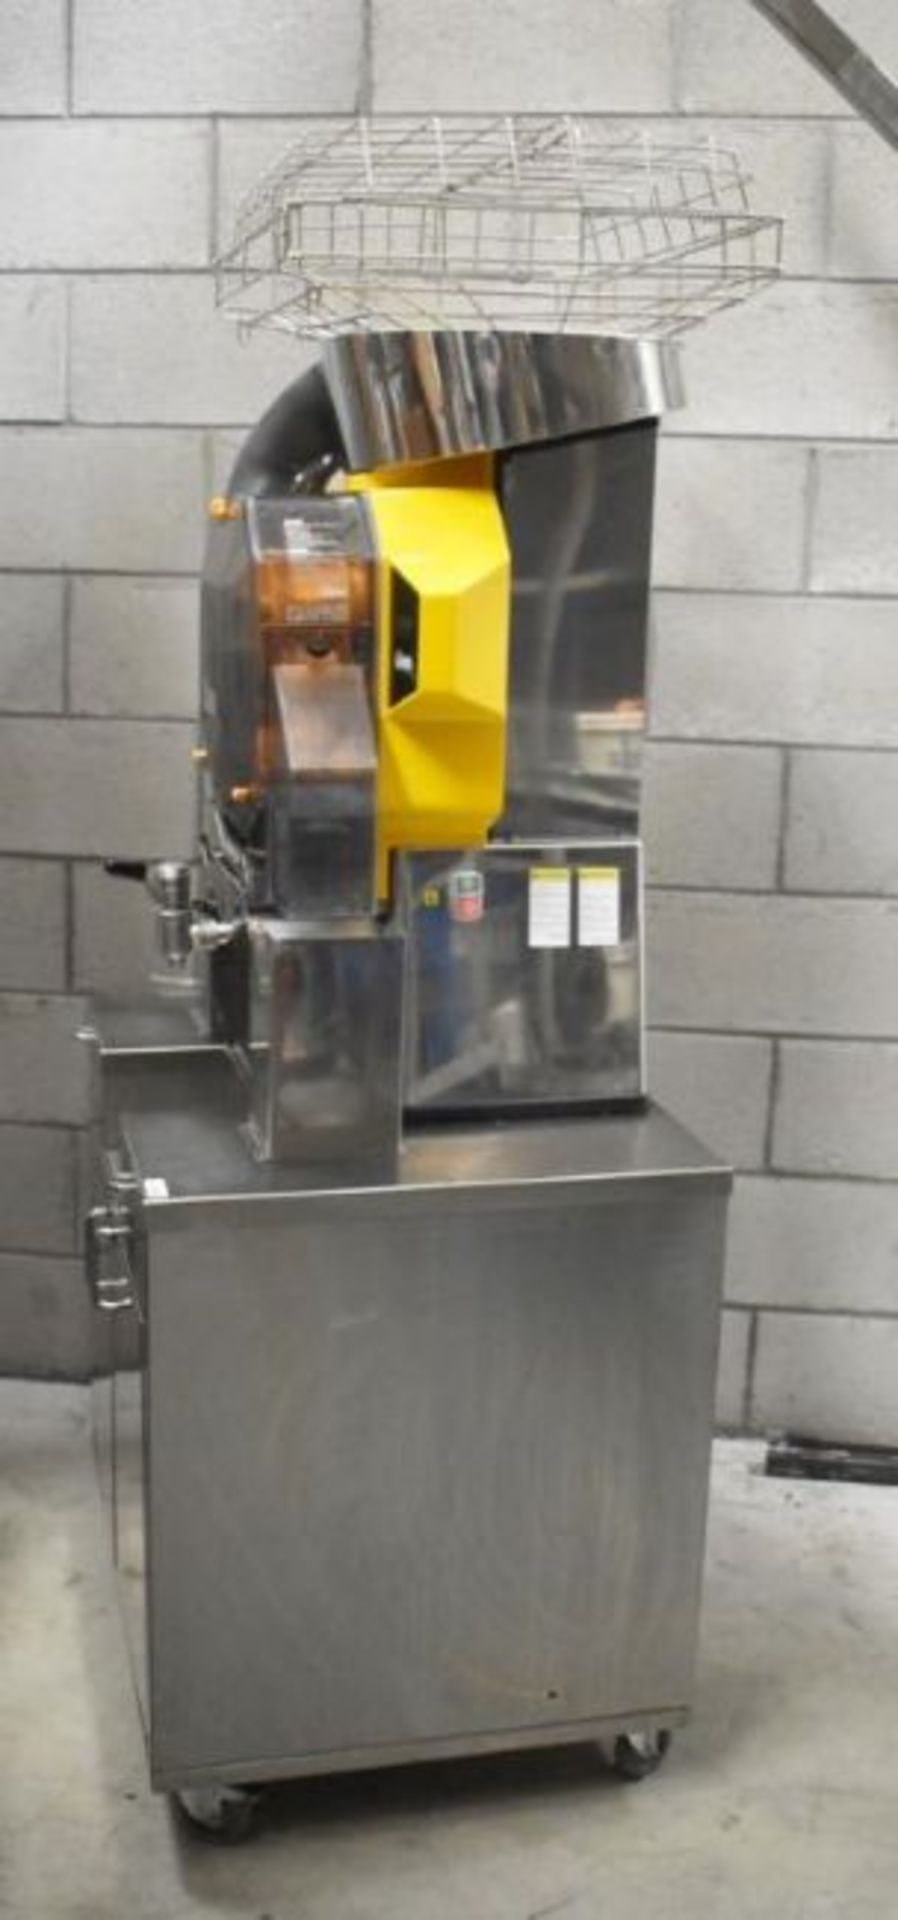 1 x Zumex Speed S +Plus Self-Service Podium Commercial Citrus Juicer - Manufactured in 2018 - - Image 5 of 20